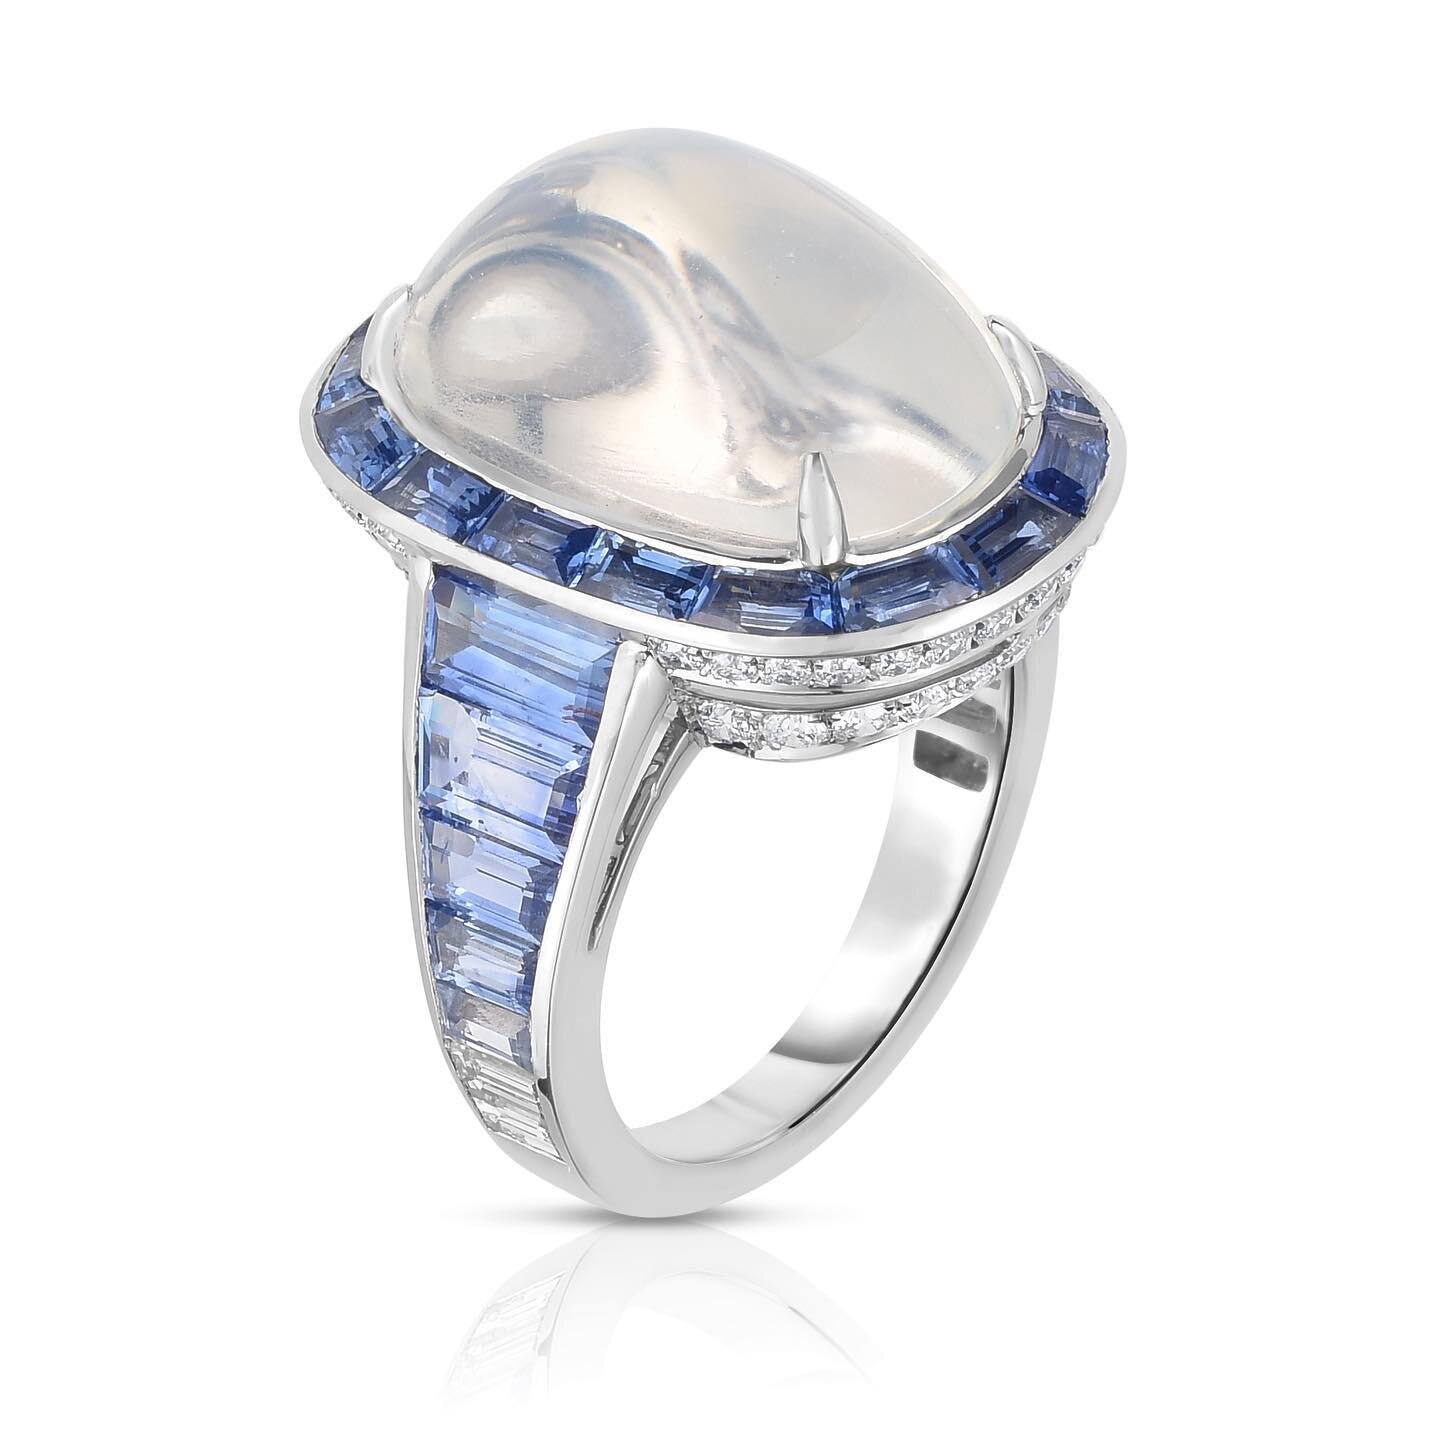 Cicada Cabochon Moonstone Ring with Sapphires in Platinum
.
.
.
.
#cicadajewelry #luxury #moonstone #nyc #jewelry #highjewelry #highjewellery #ring #cicada #oneofakind #oneofakindjewelry #finejewelry #instajewelry #madeinnewyork #couture #luxurylifes